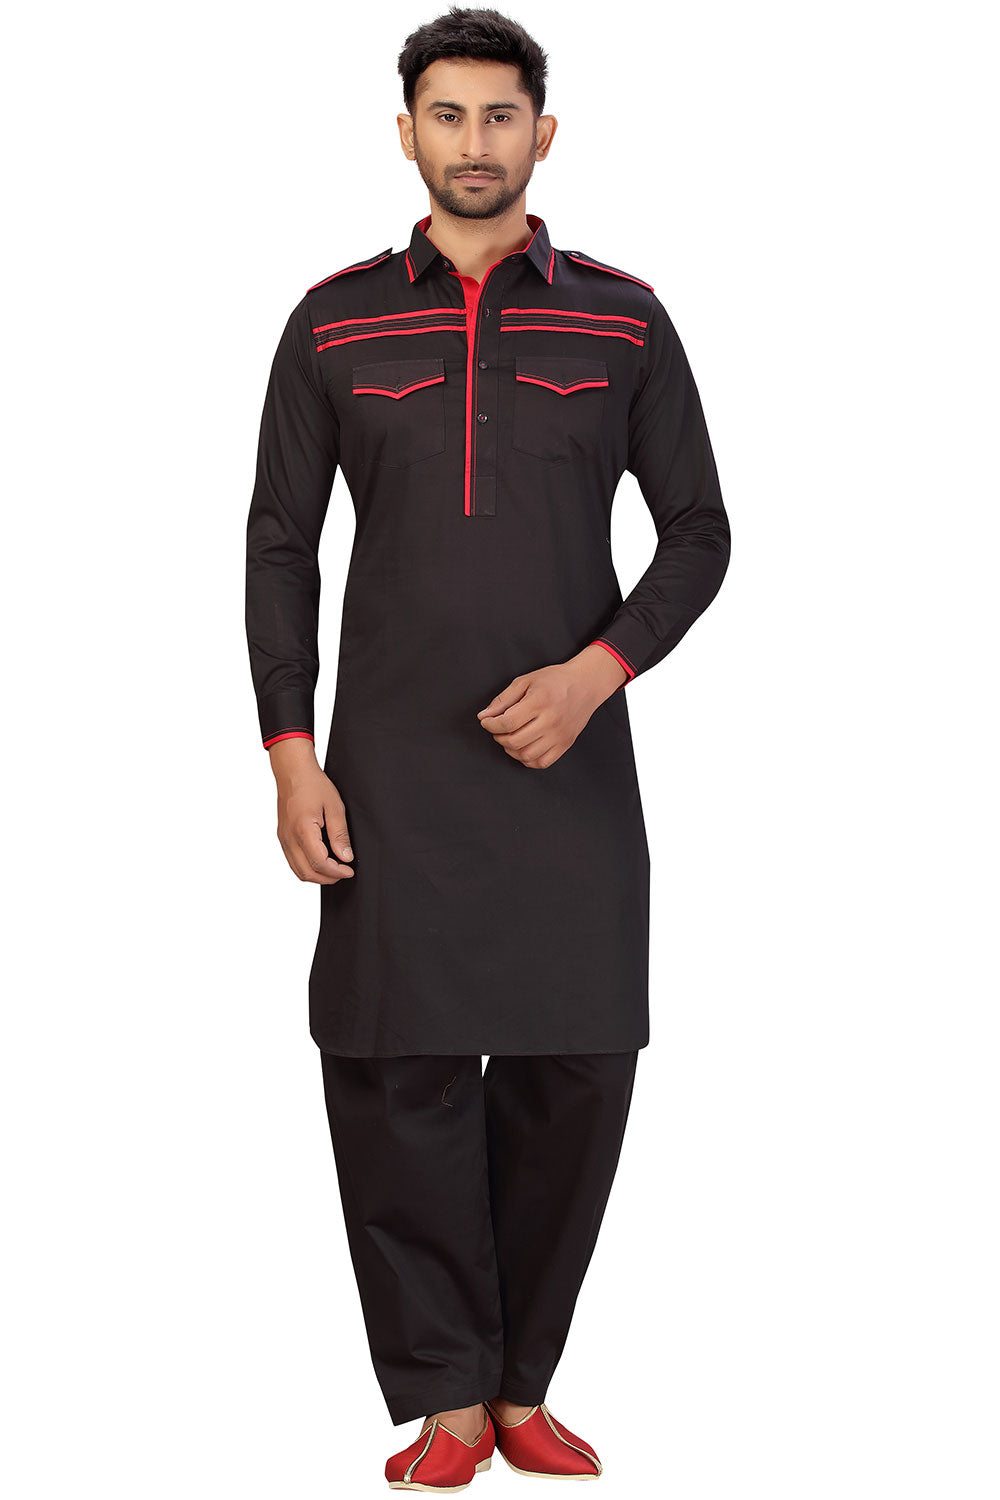 Buy Men's Blended Cotton Solid Pathani Set in Black Online - Front